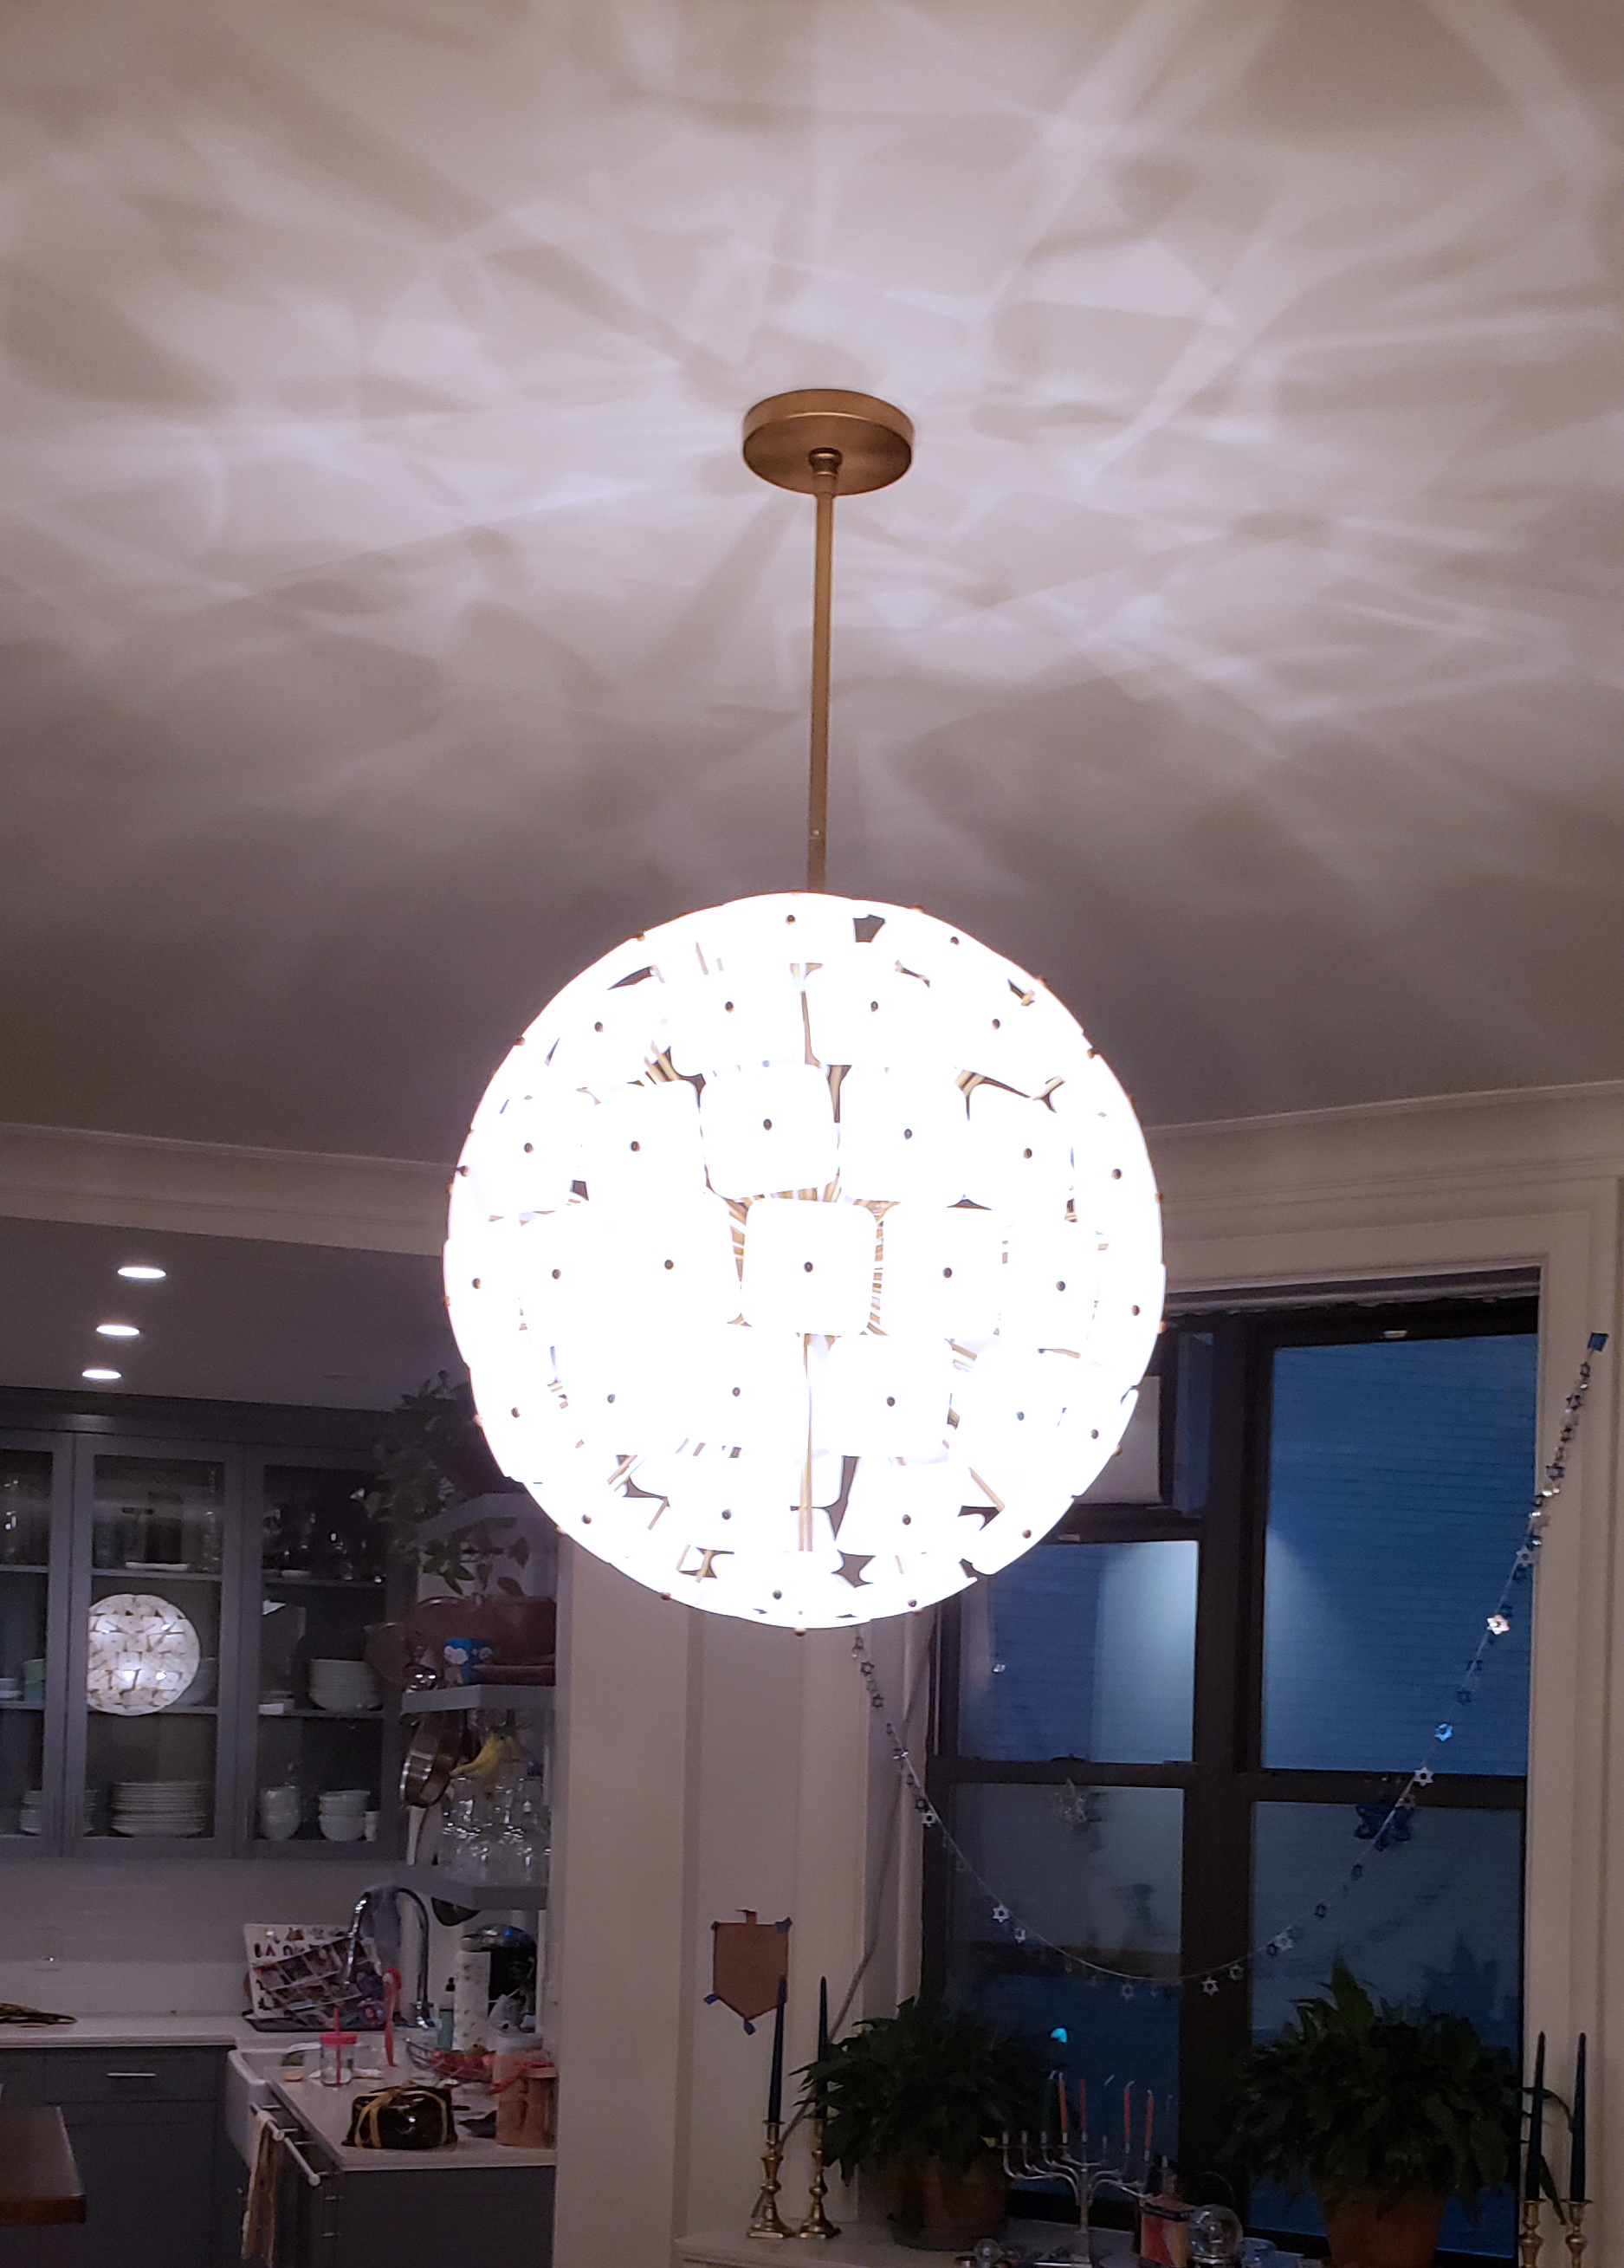 darren fuentes handyman services ball lighting home improvement